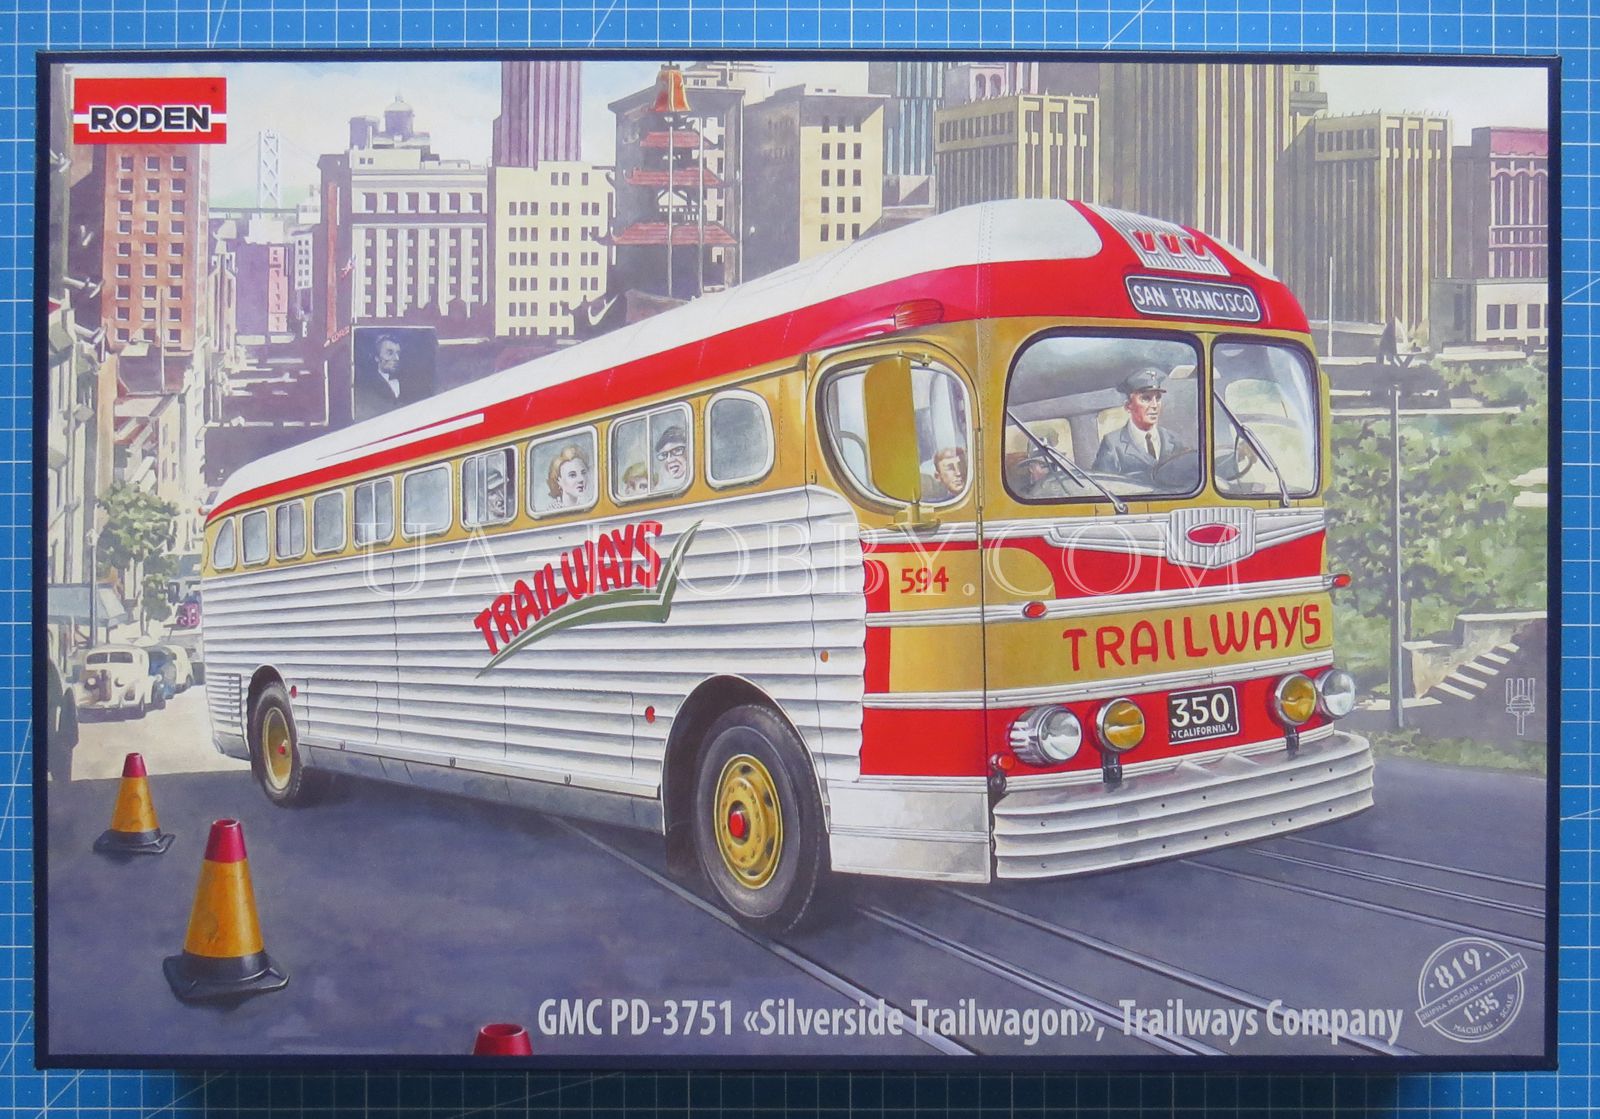 1/35 GMC PD-3751 "Silverside Trailwagon" Trailways Company. Roden 819